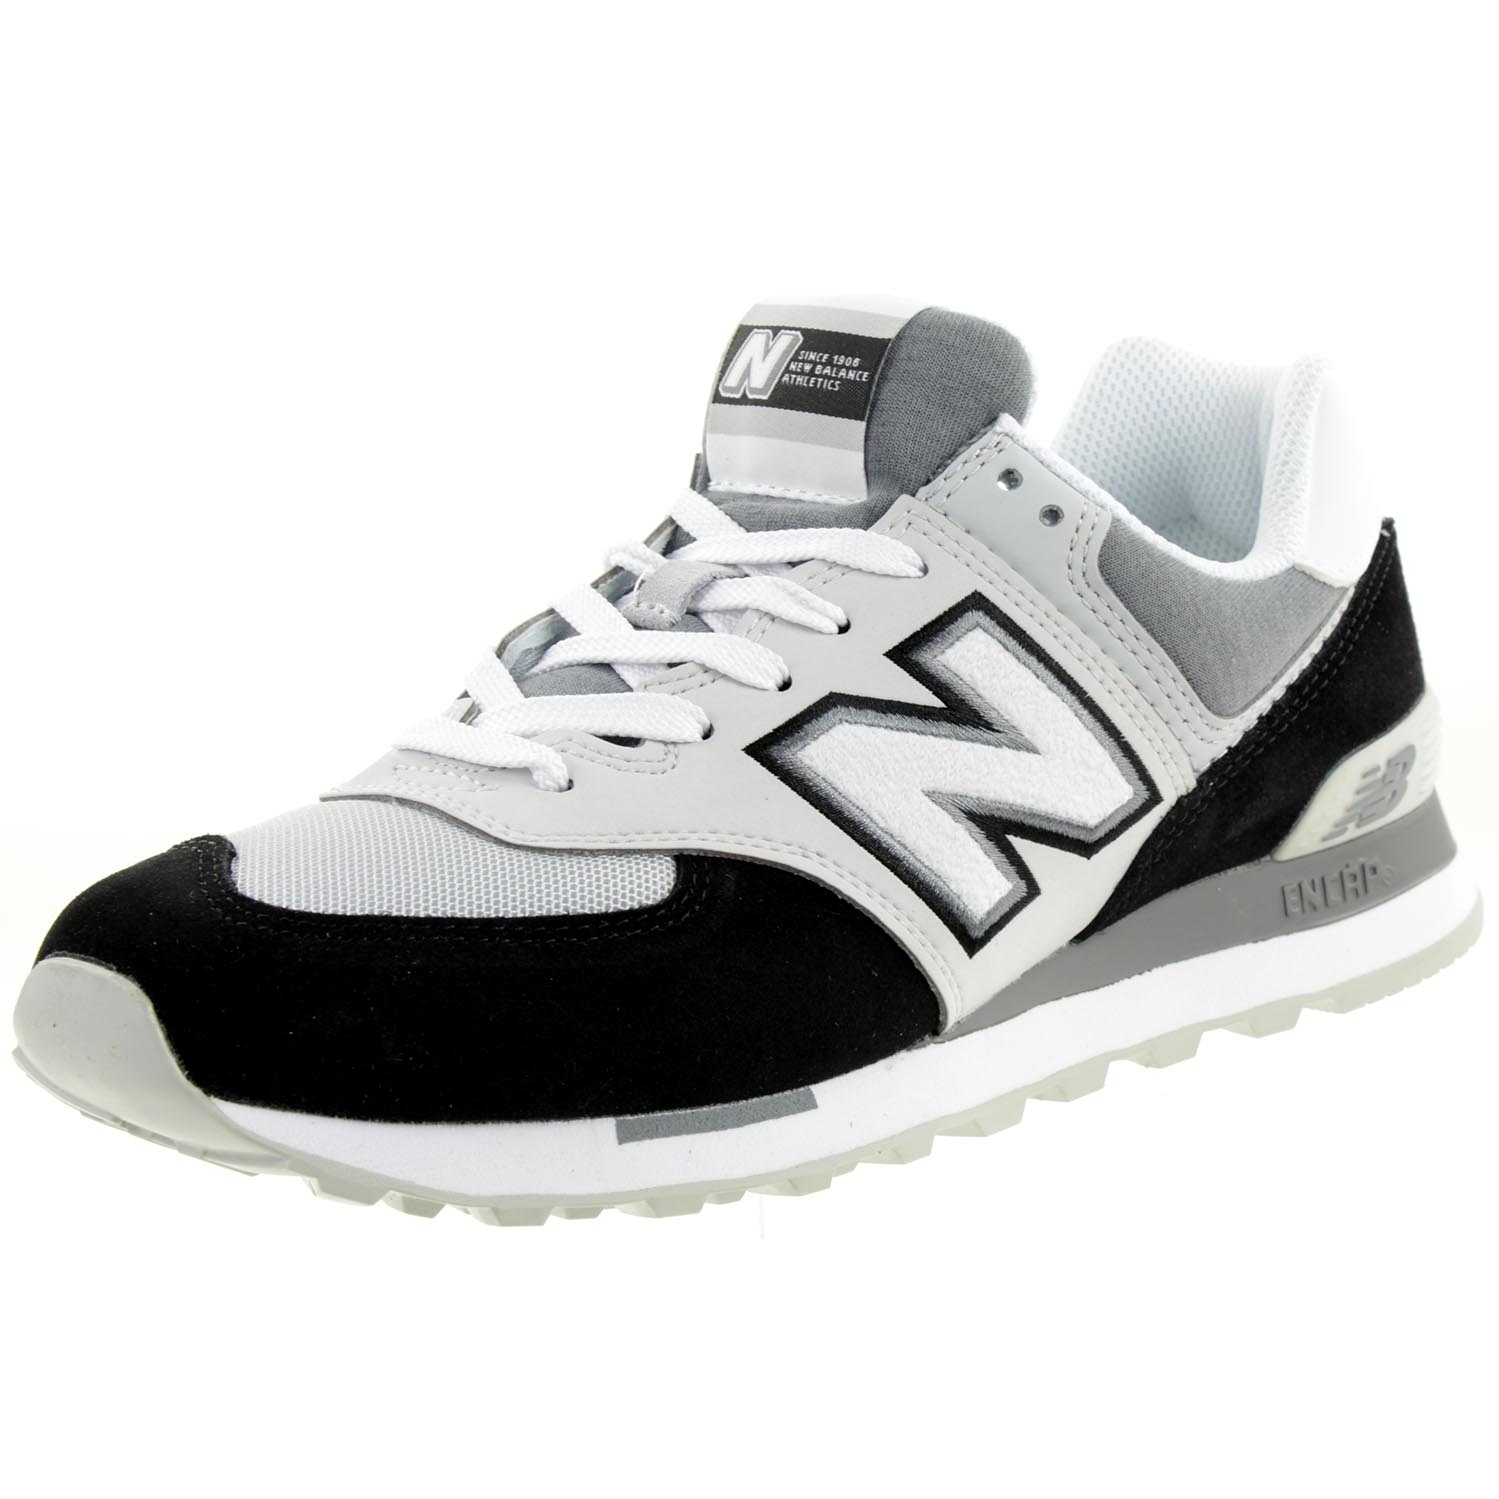 New Balance ML 574 NLC Classic Sneaker Herren Schuhe schwarz grau